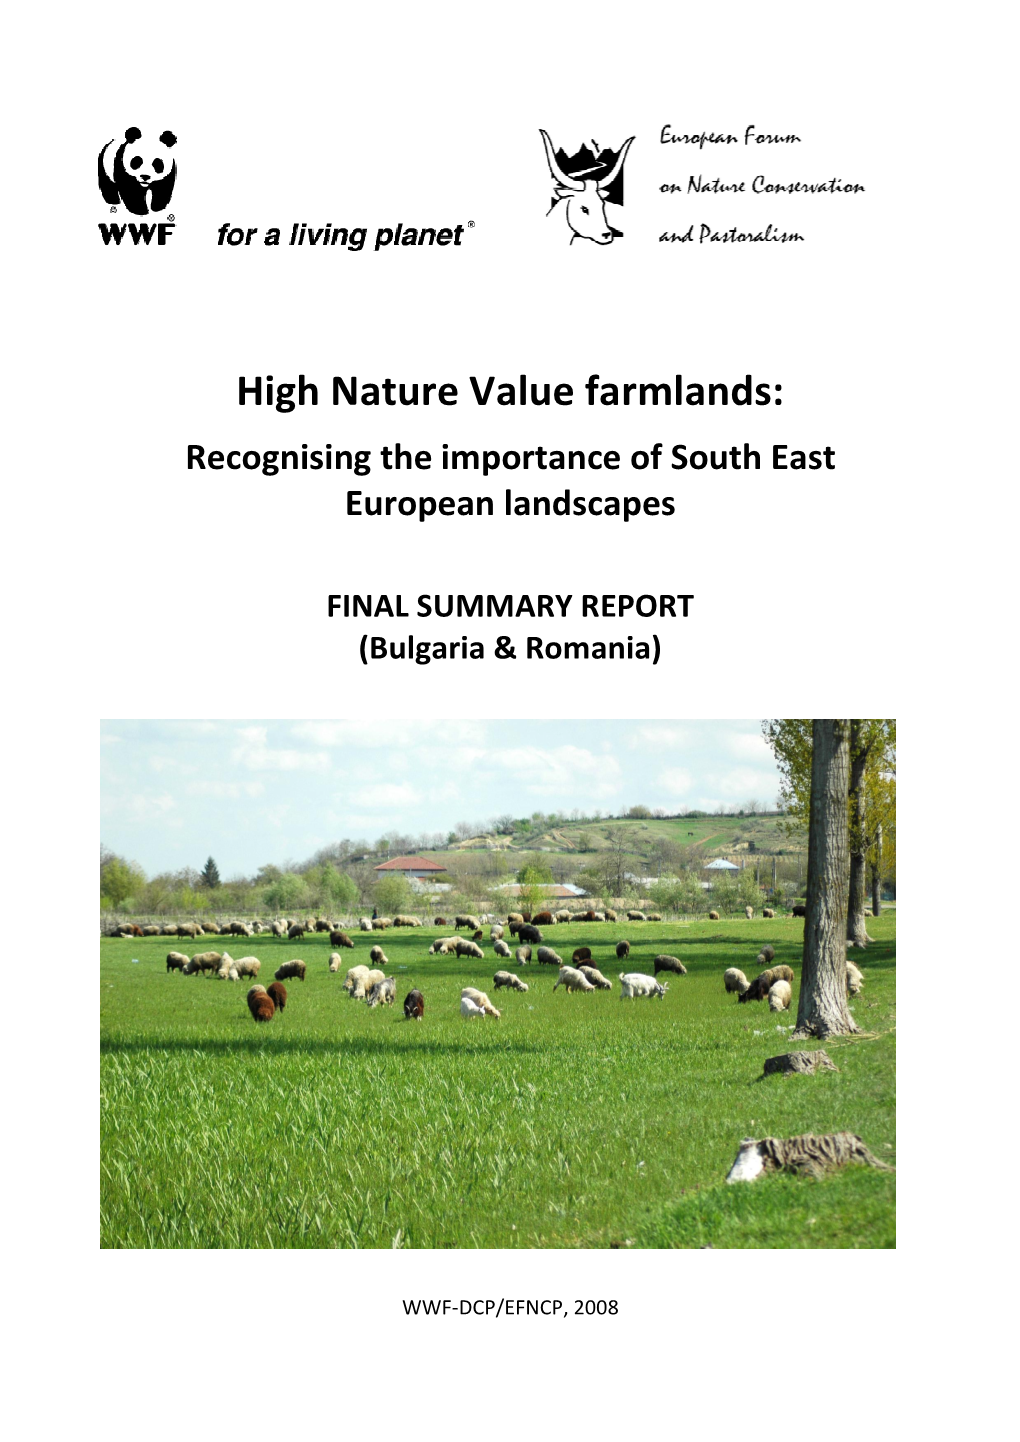 High Nature Value Farmlands